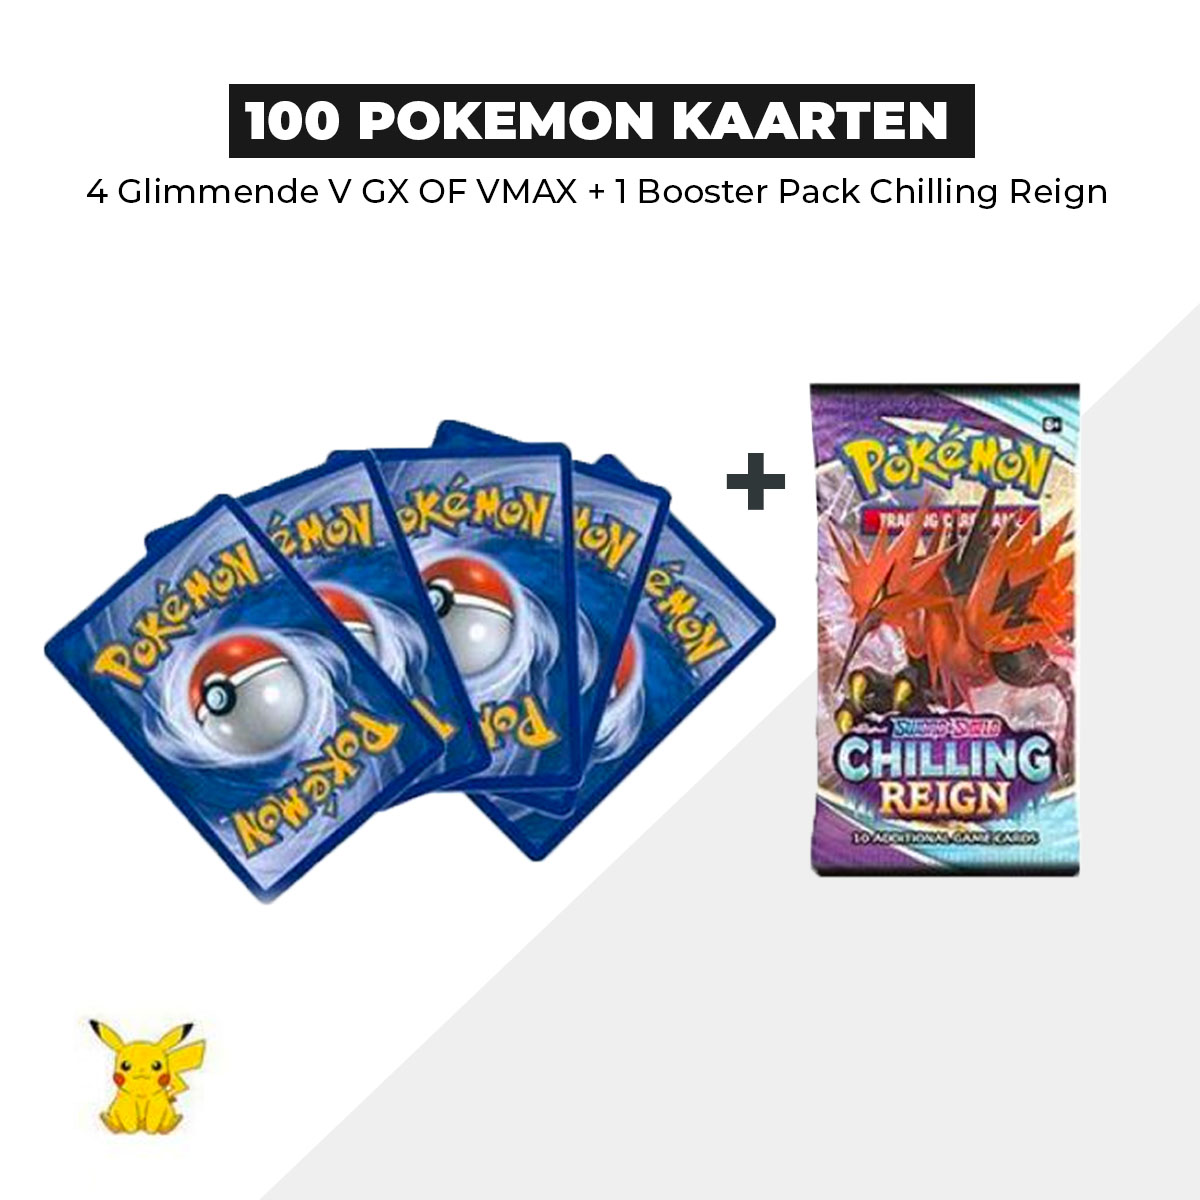 100 Pokémon Kaarten Bundel + 1 Chilling Reign Booster pack